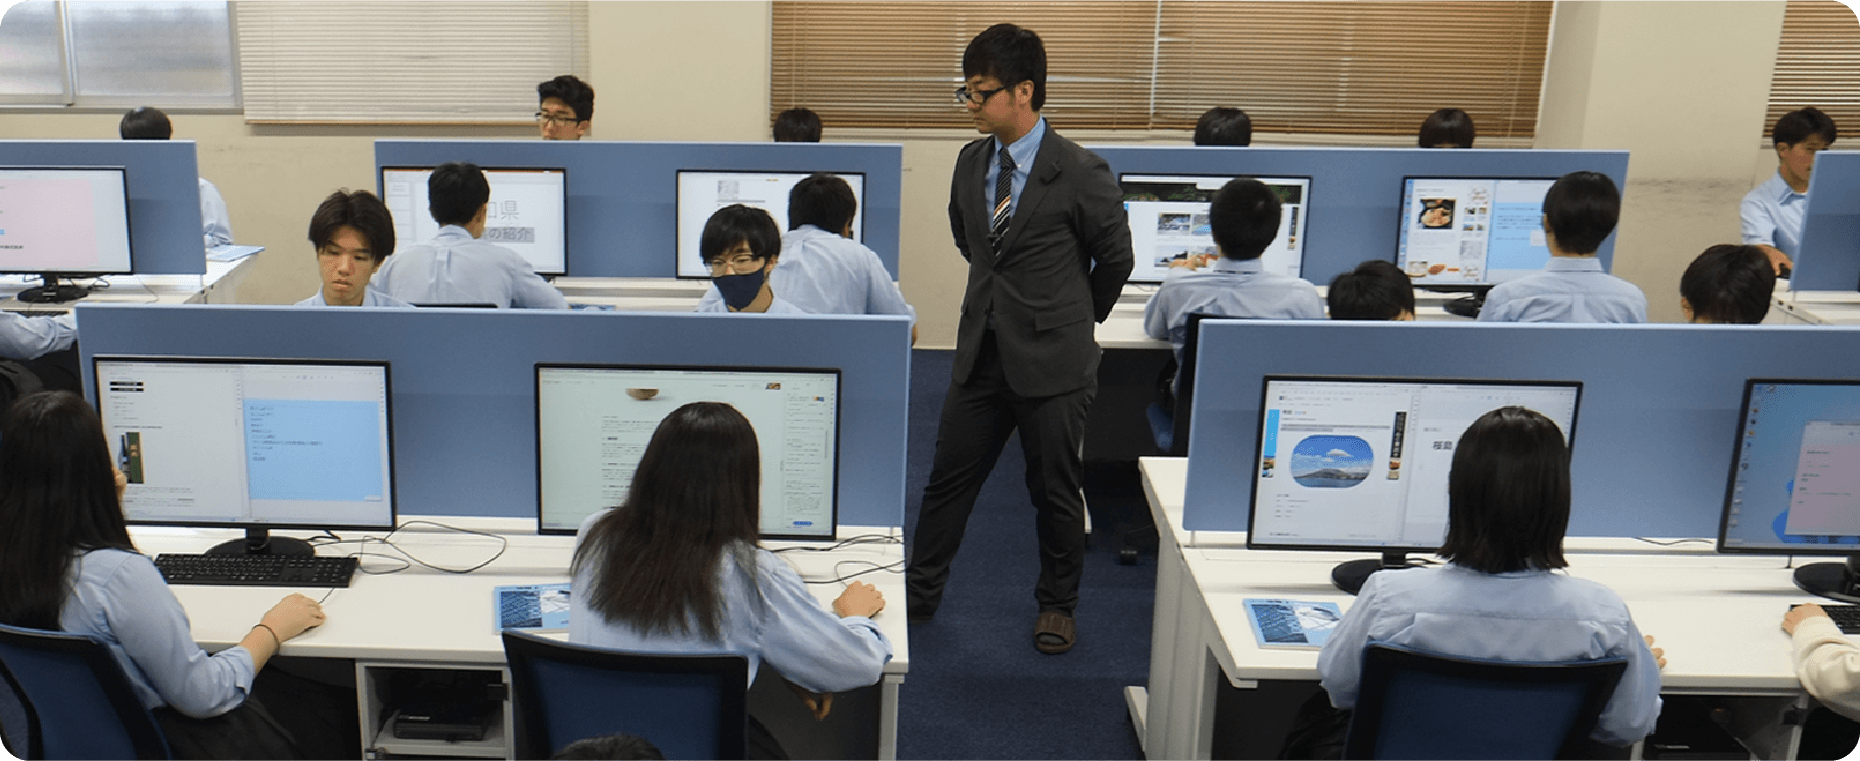 大阪産業大学附属高等学校　ClassPad.netを使った授業風景